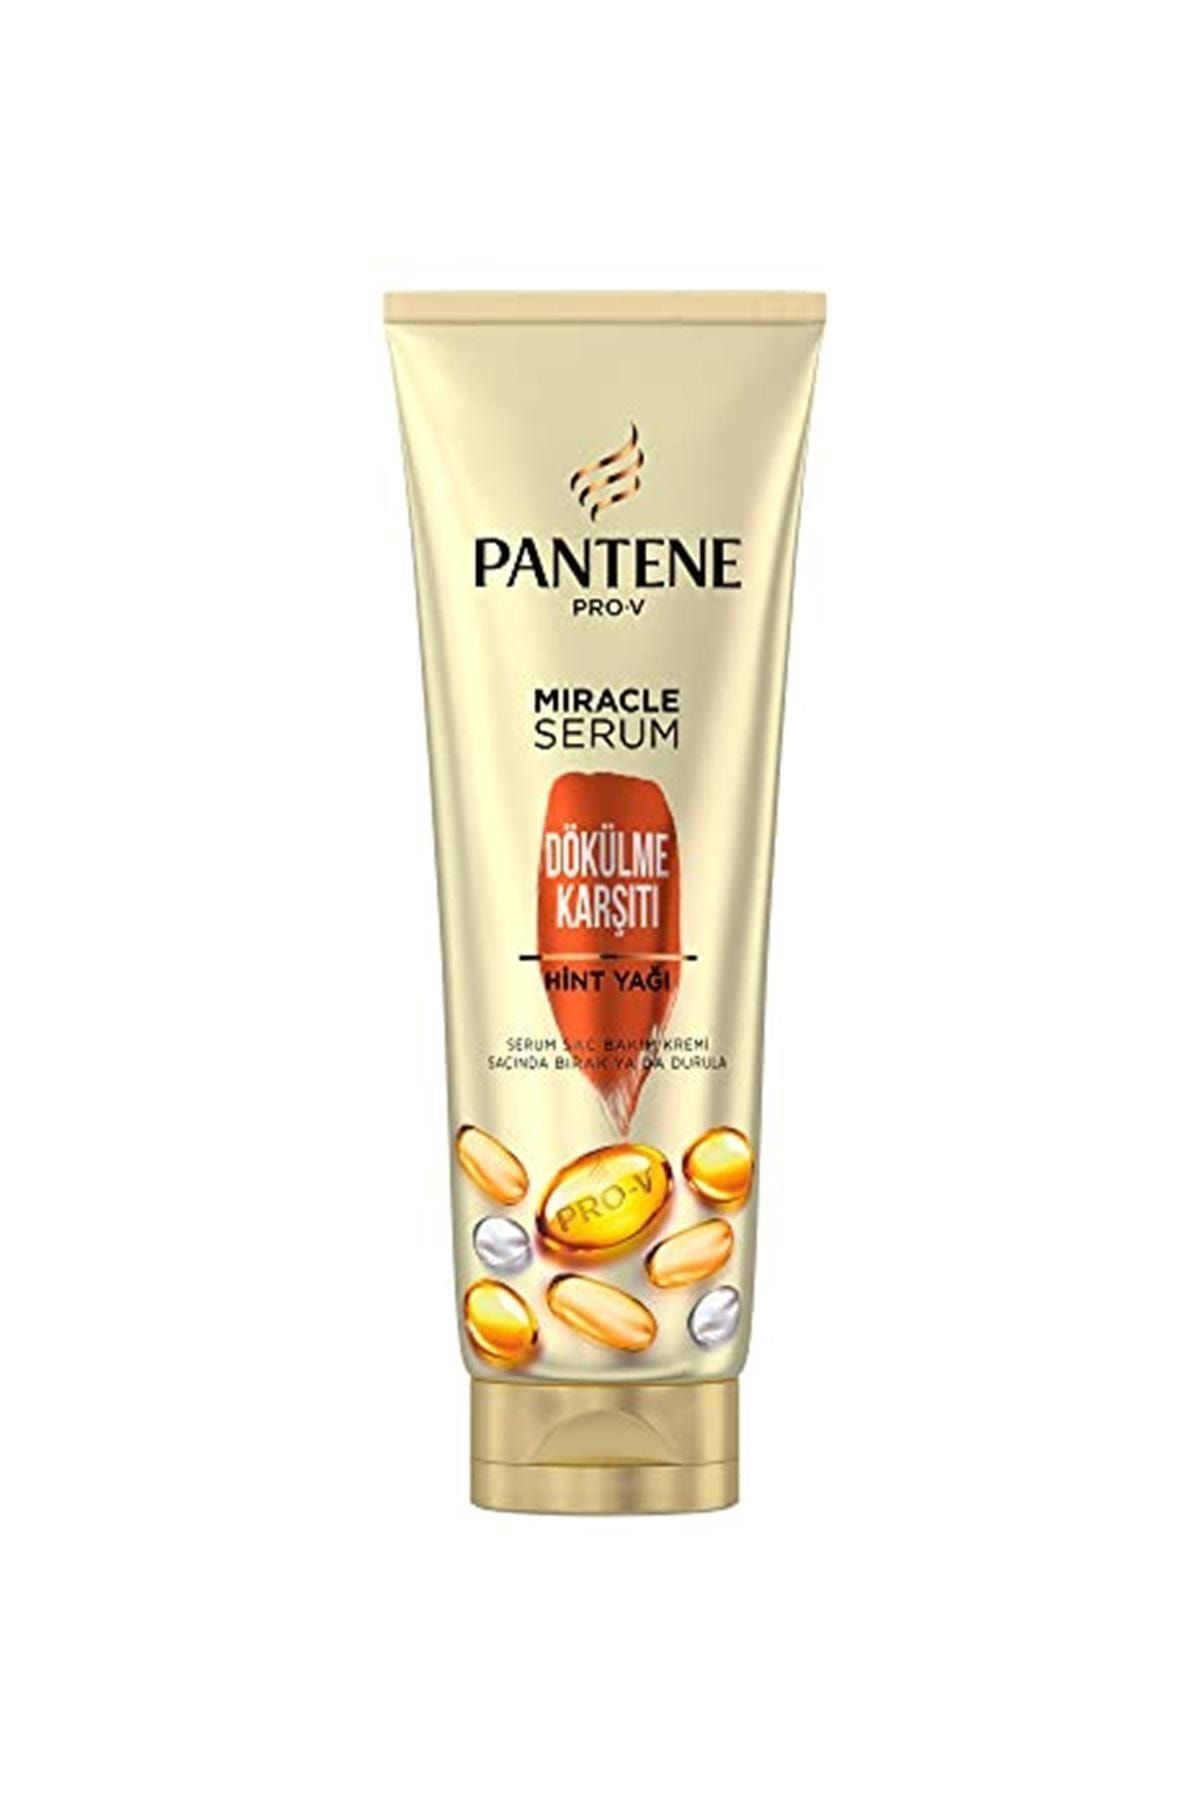 Pantene Miracle Dökülme Karşıtı Serum Saç Bakım Kremi 200 Ml